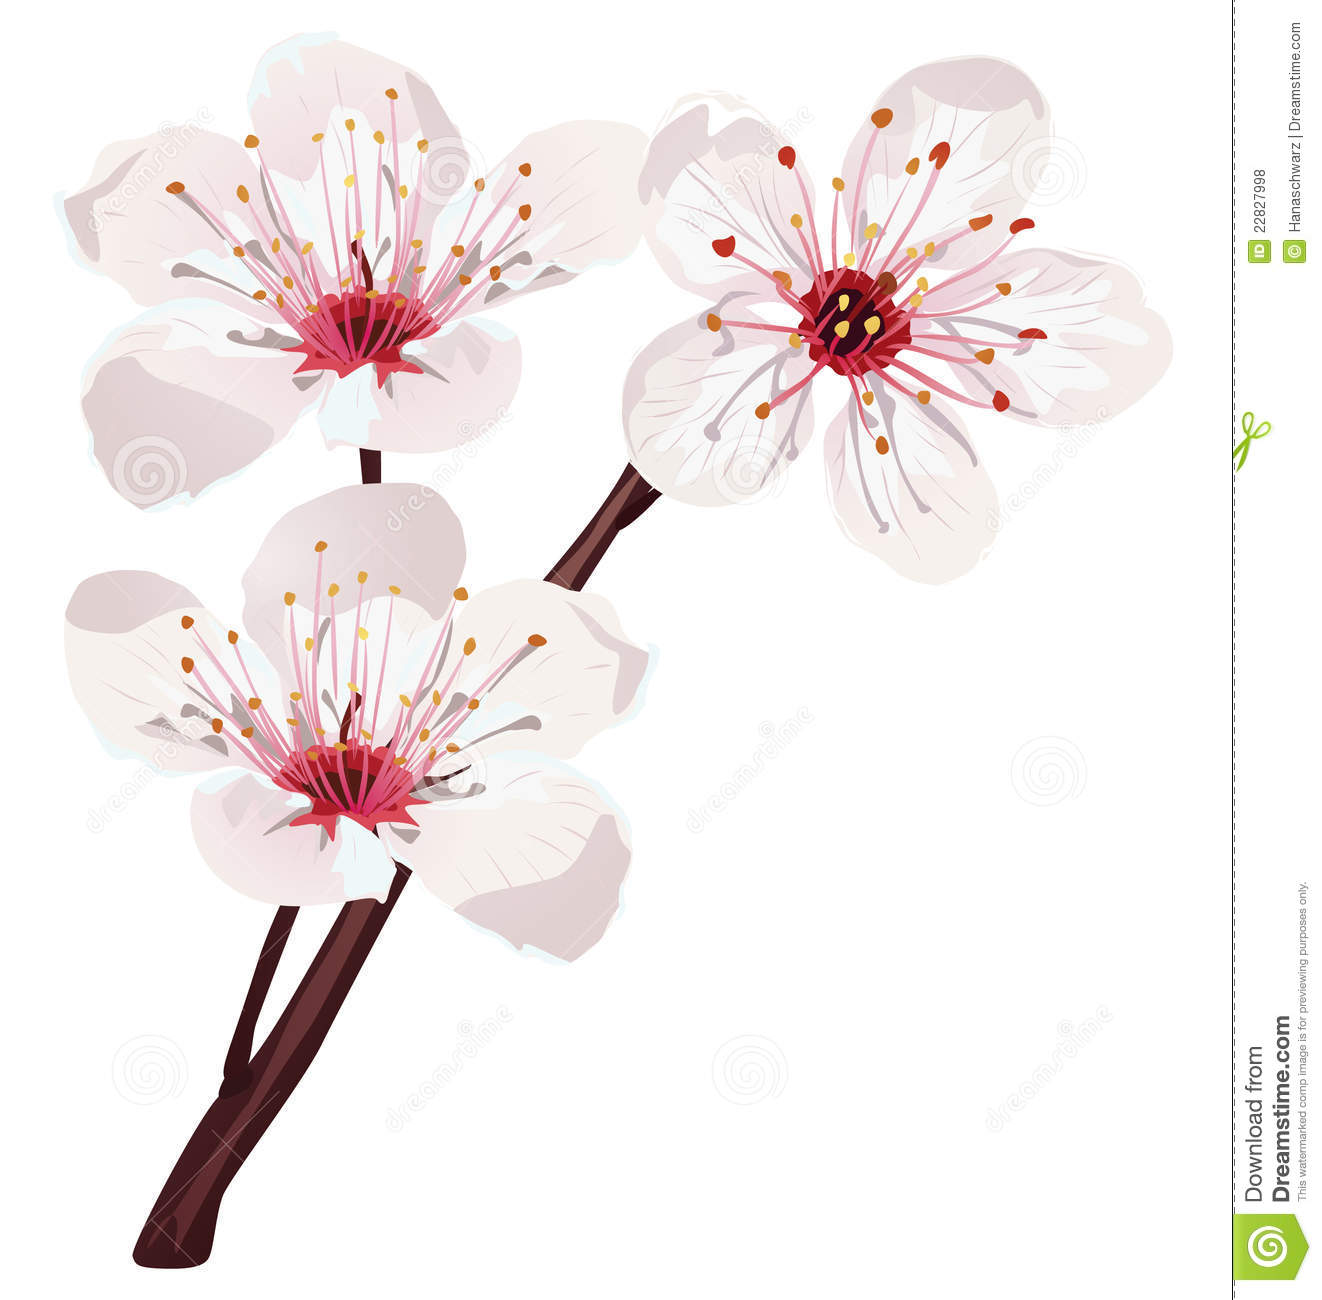 Cherry Blossom Vector Free